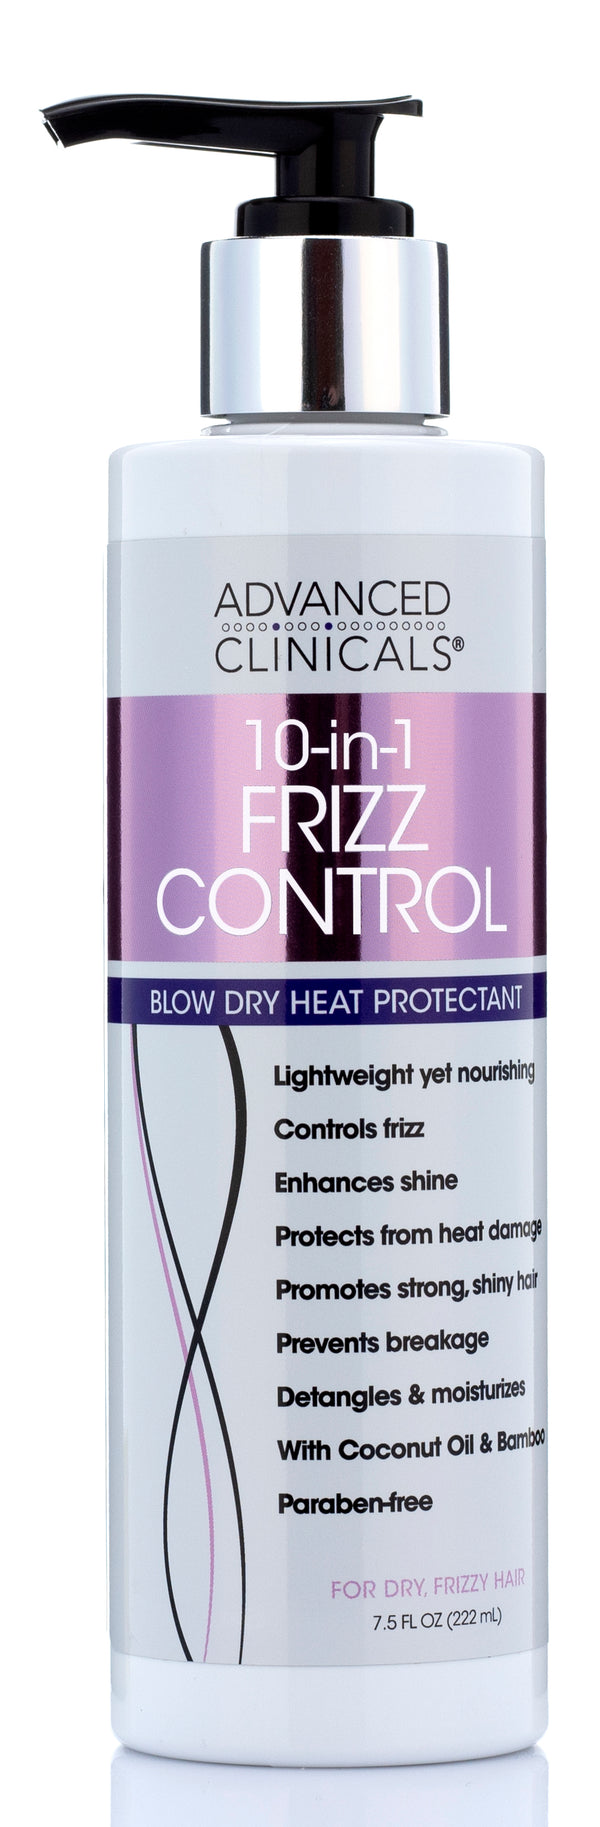 Advanced Clinicals 10-in-1 Frizz Control Hair Cream 7.5 Fl Oz